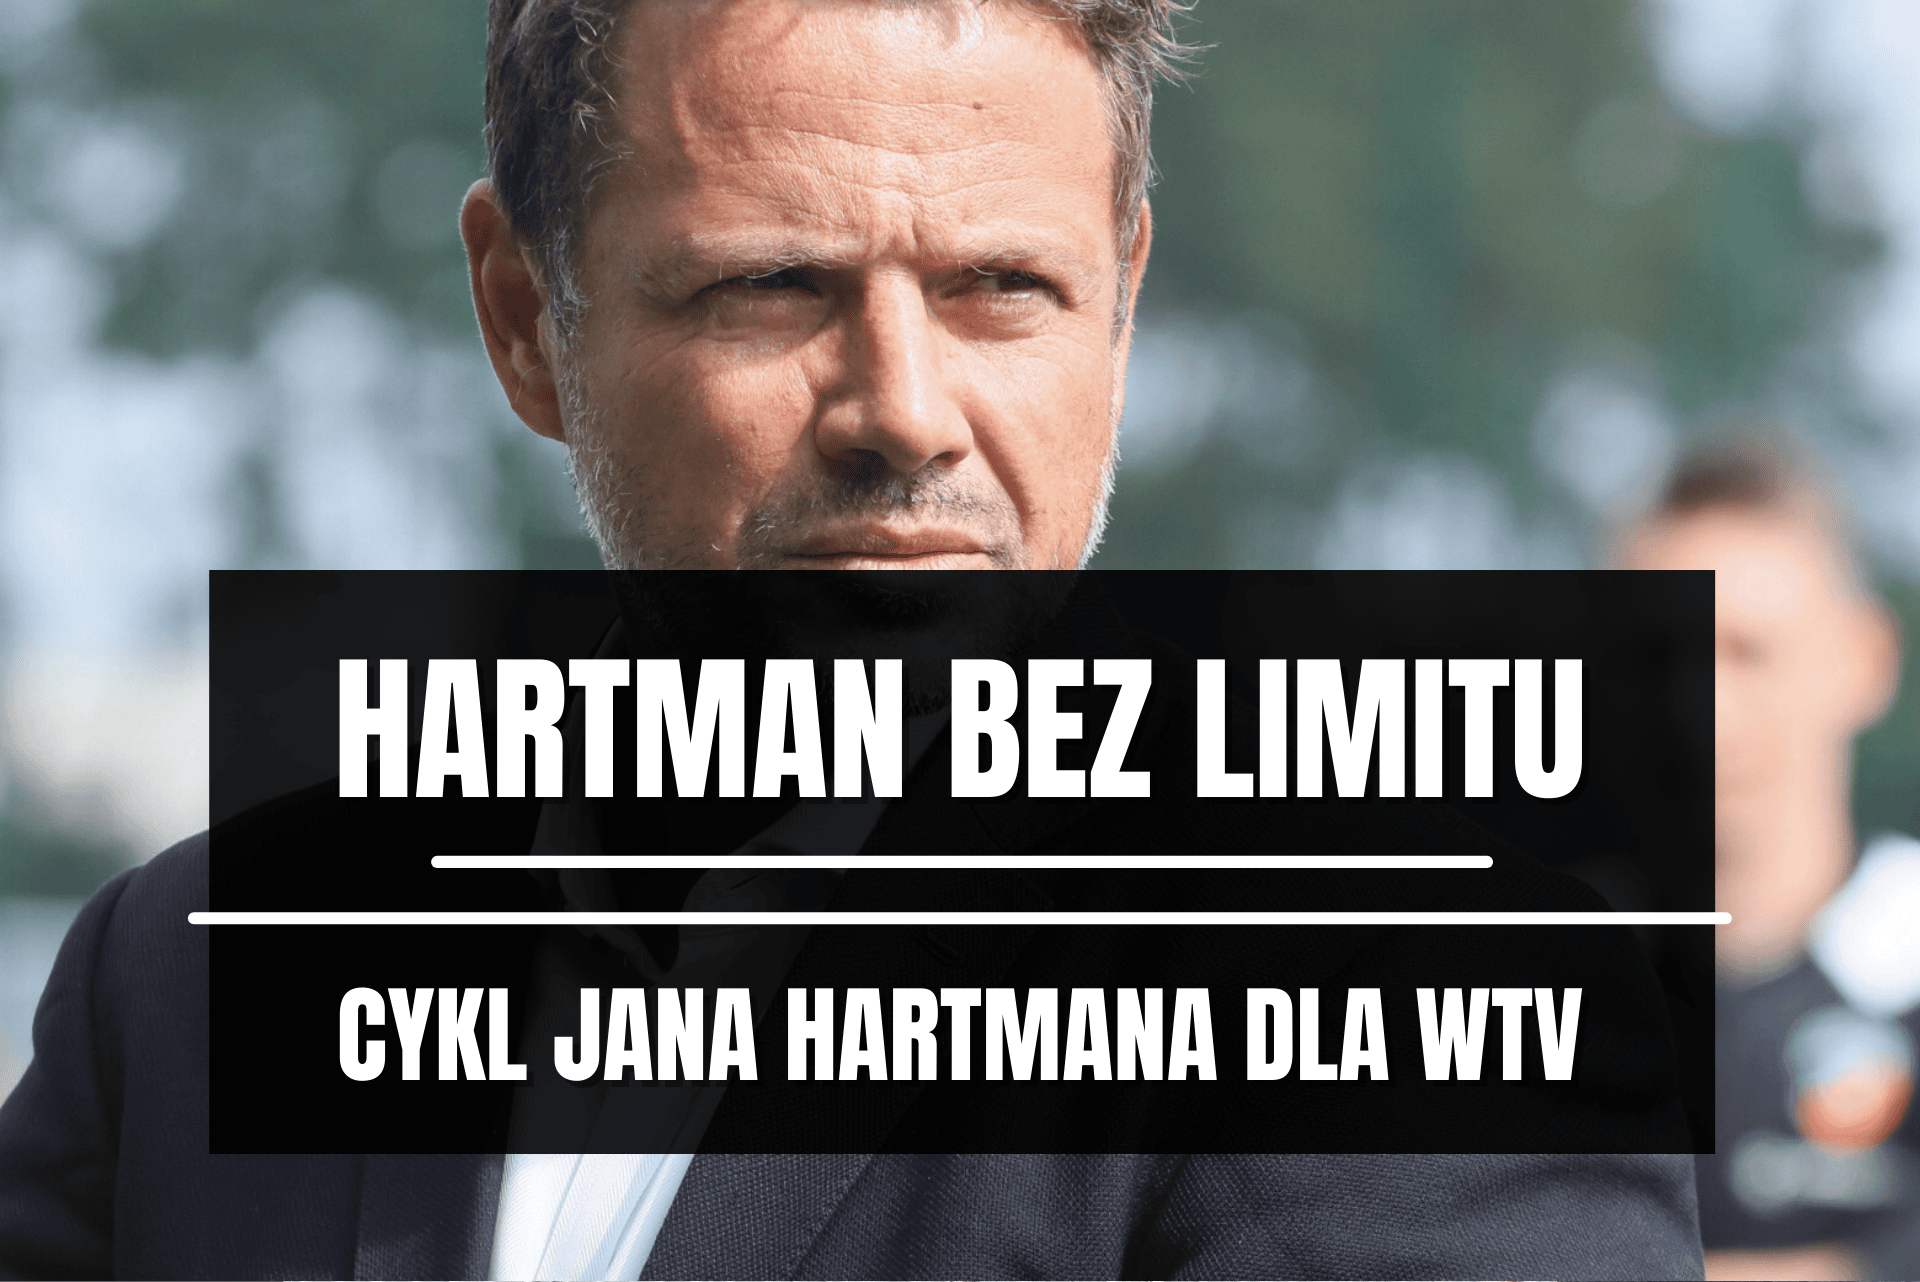 Jan Hartman